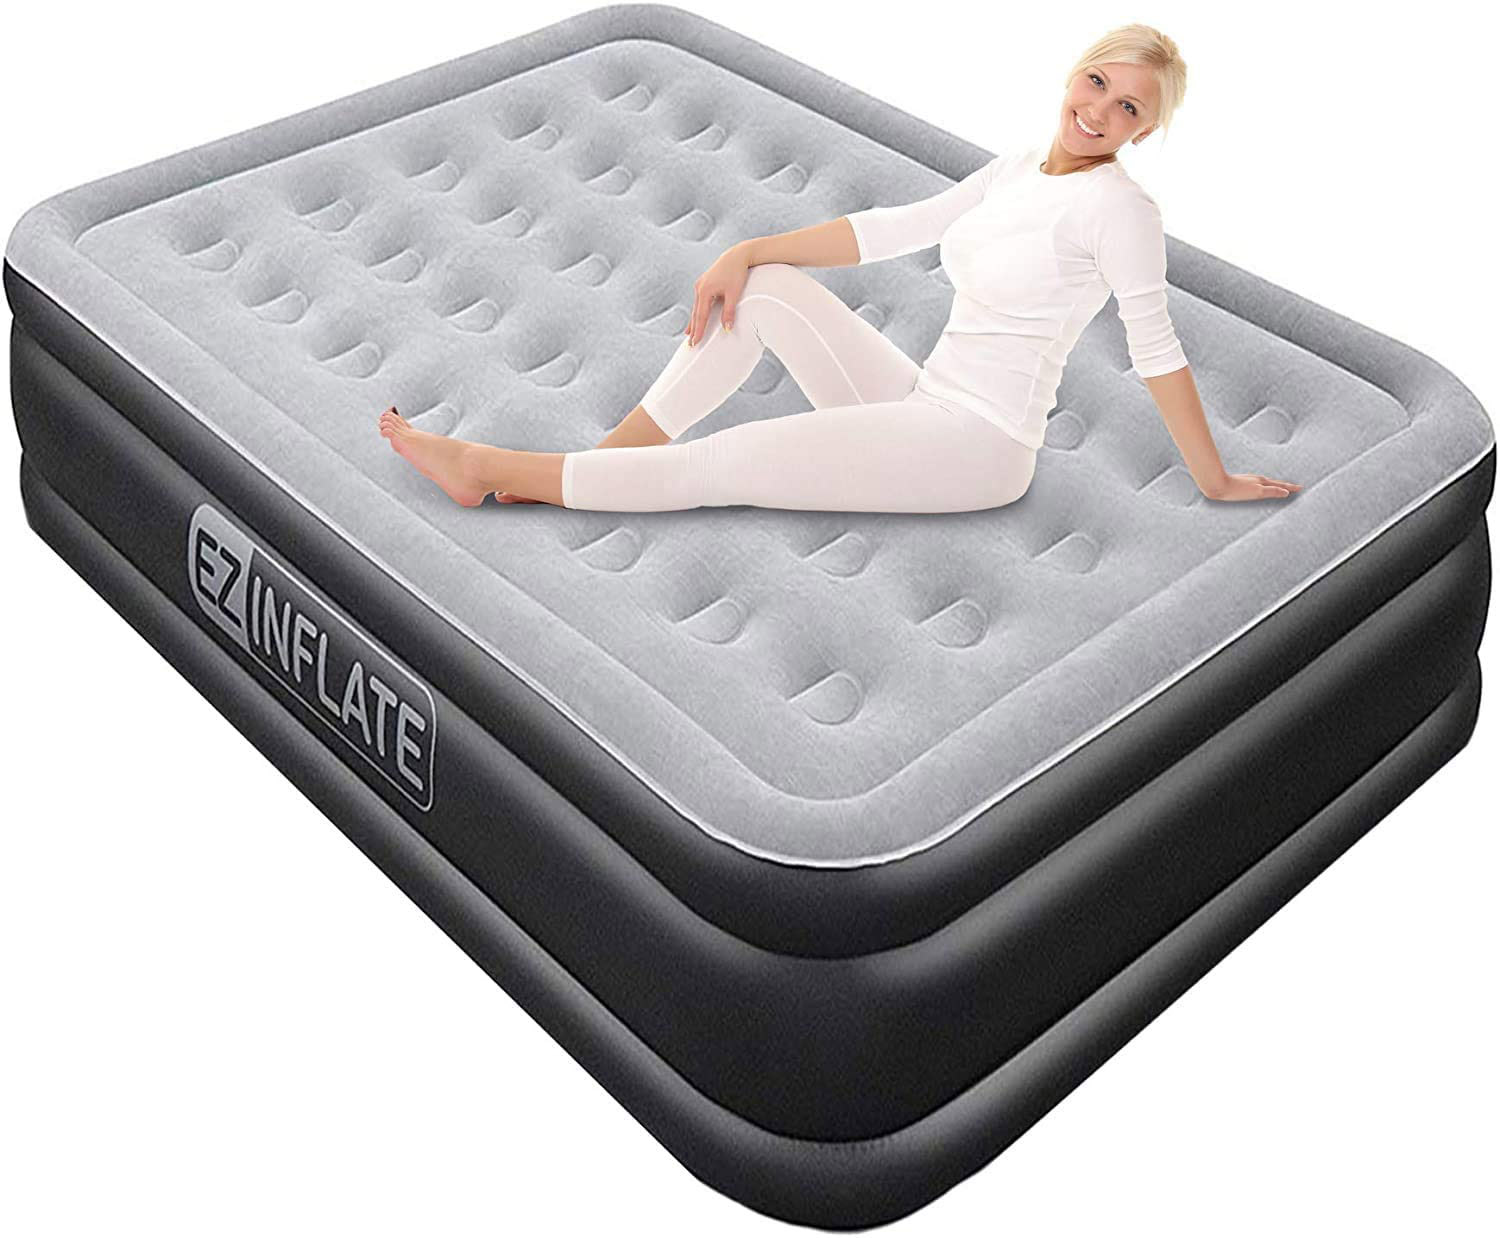 aldi camping air mattress